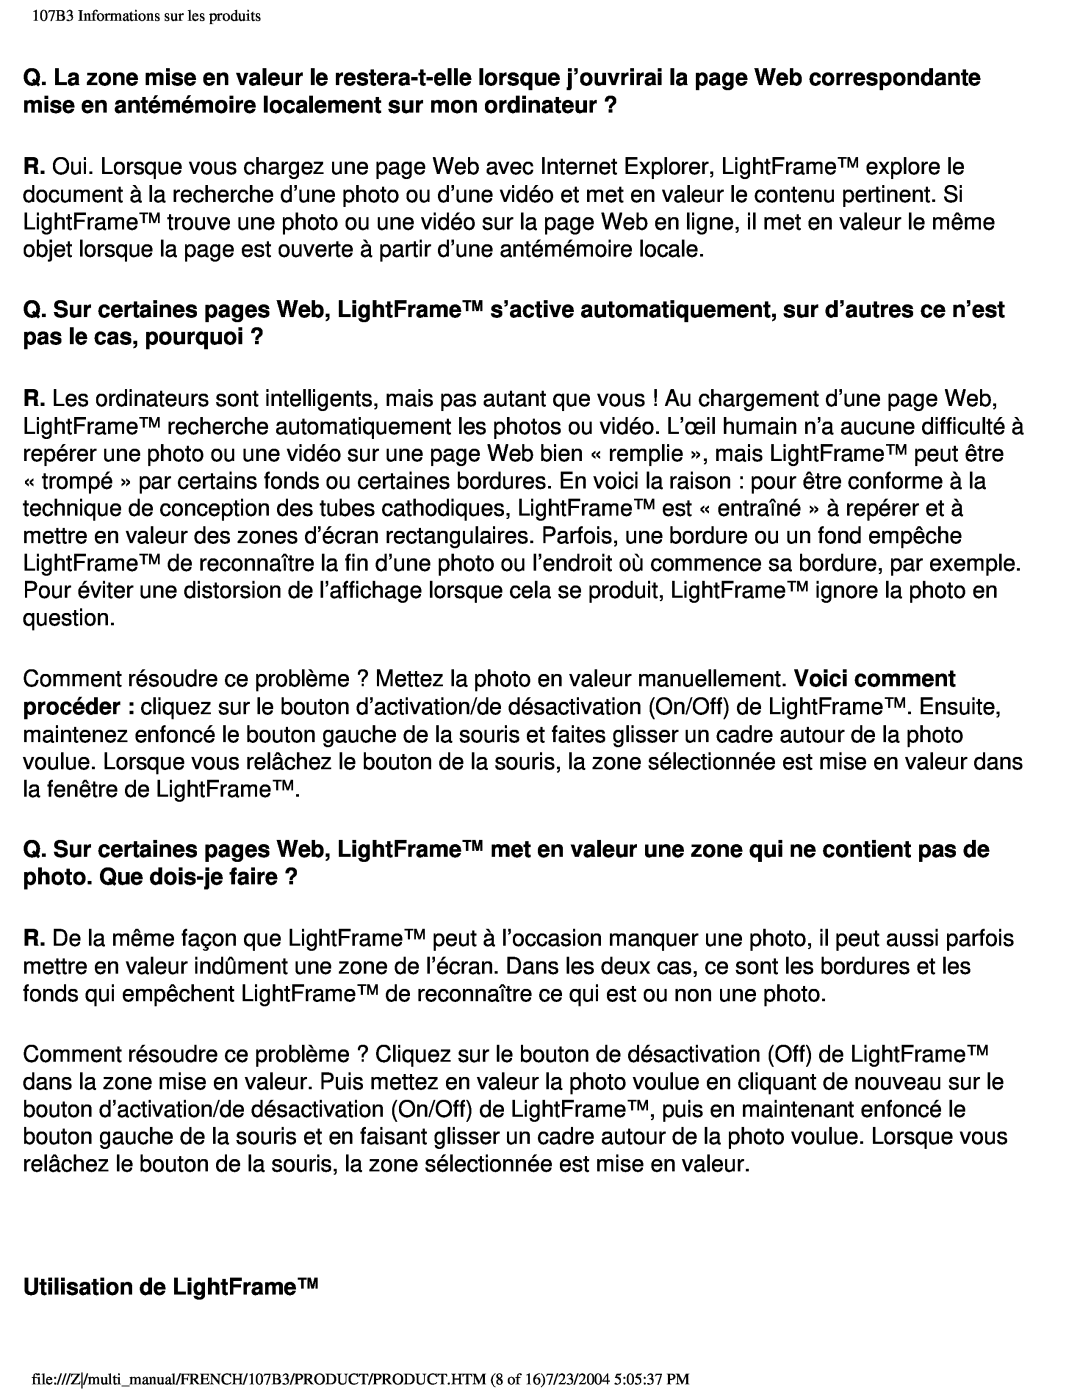 Philips 107B3 user manual Utilisation de LightFrame 